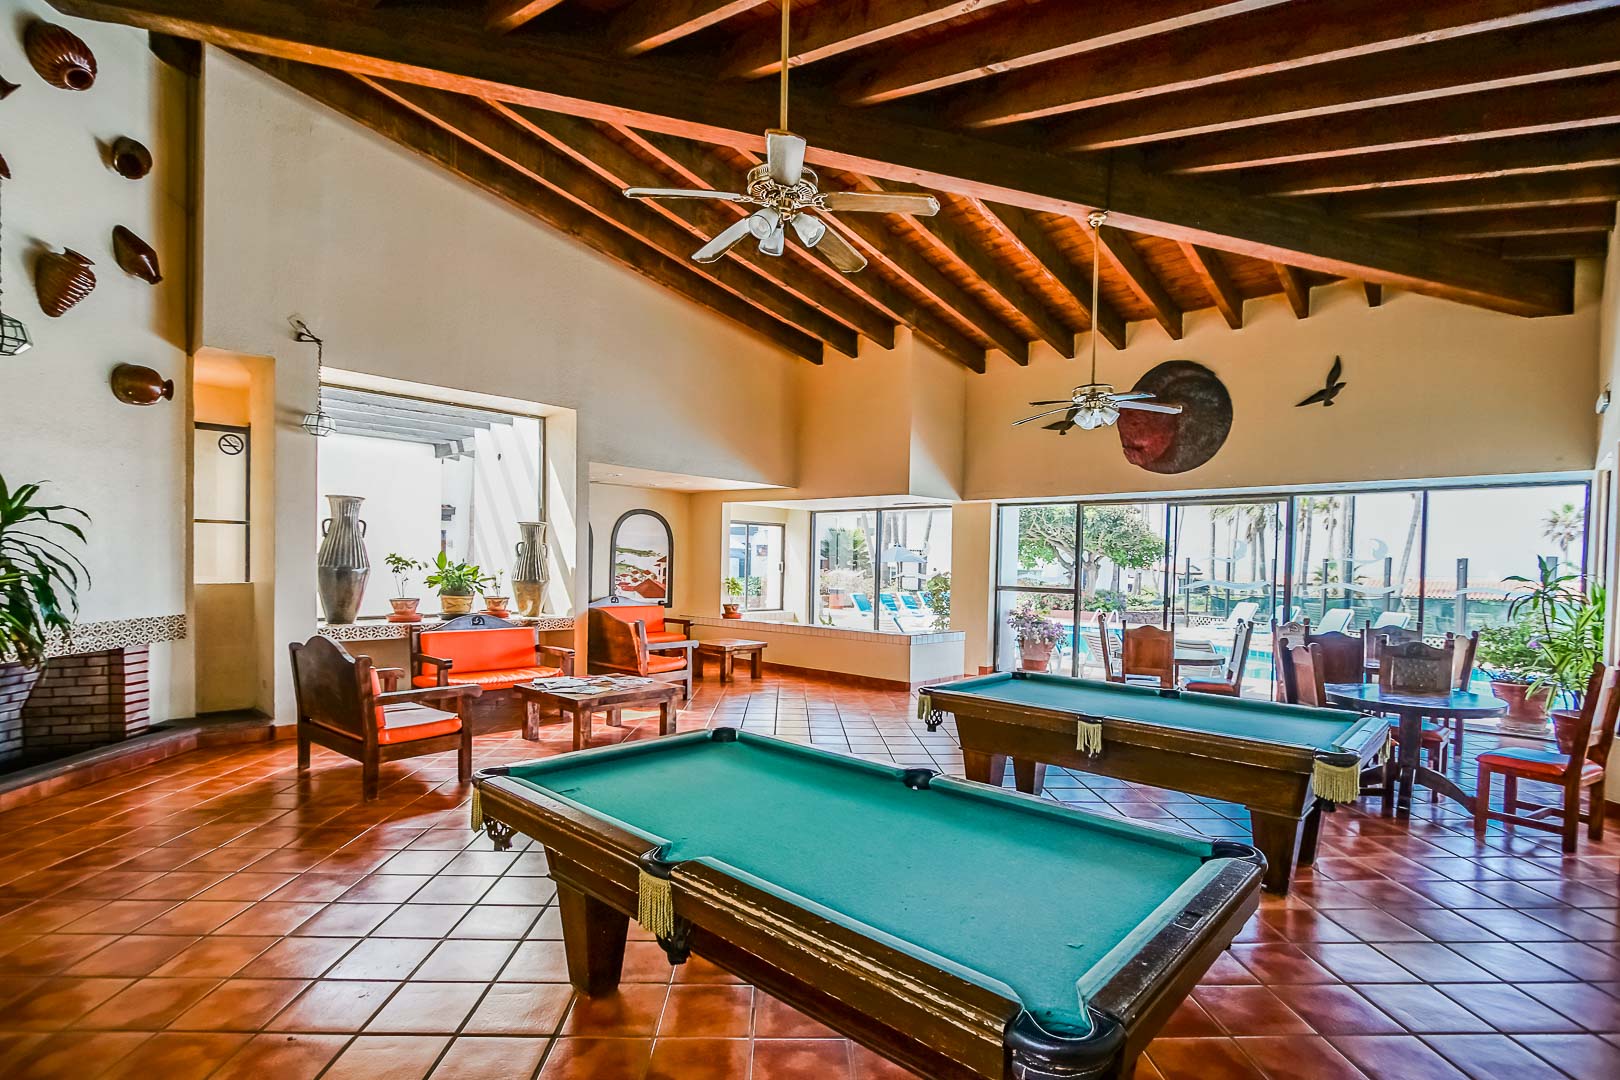 Pool tables available at VRI's La Paloma in Rosarito, Mexico.